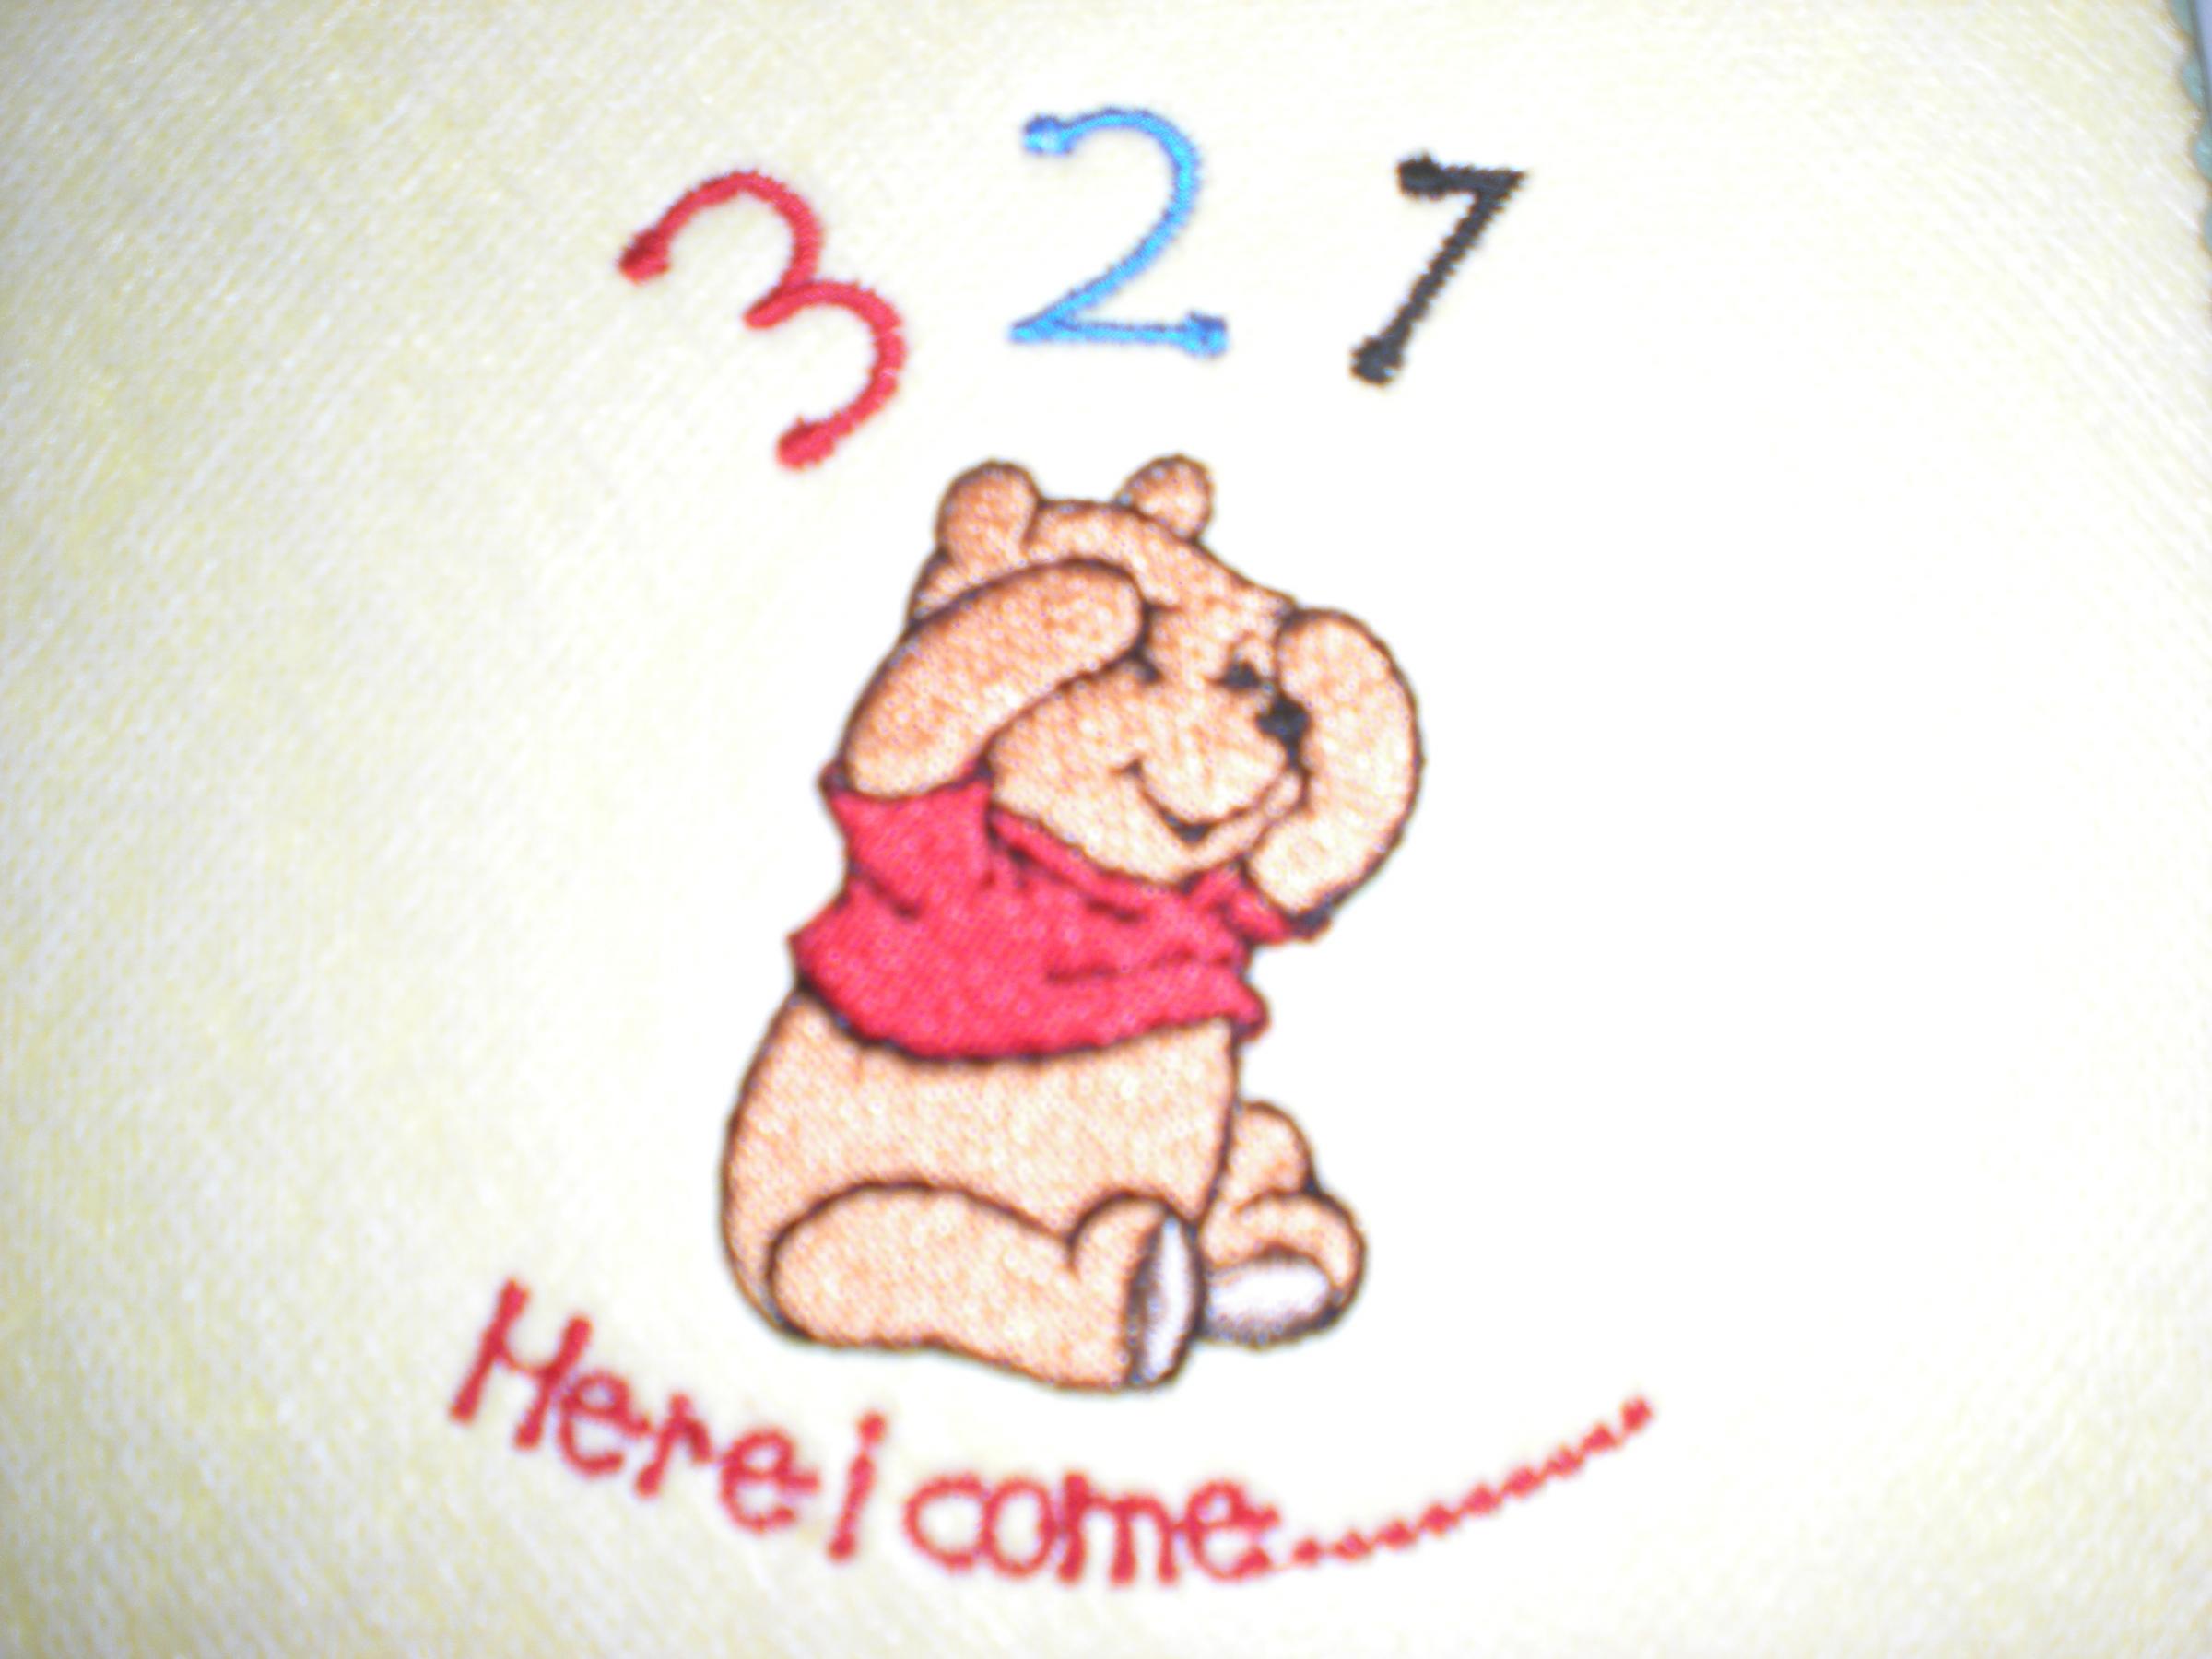 Winnie Pooh numerate machine embroidery design